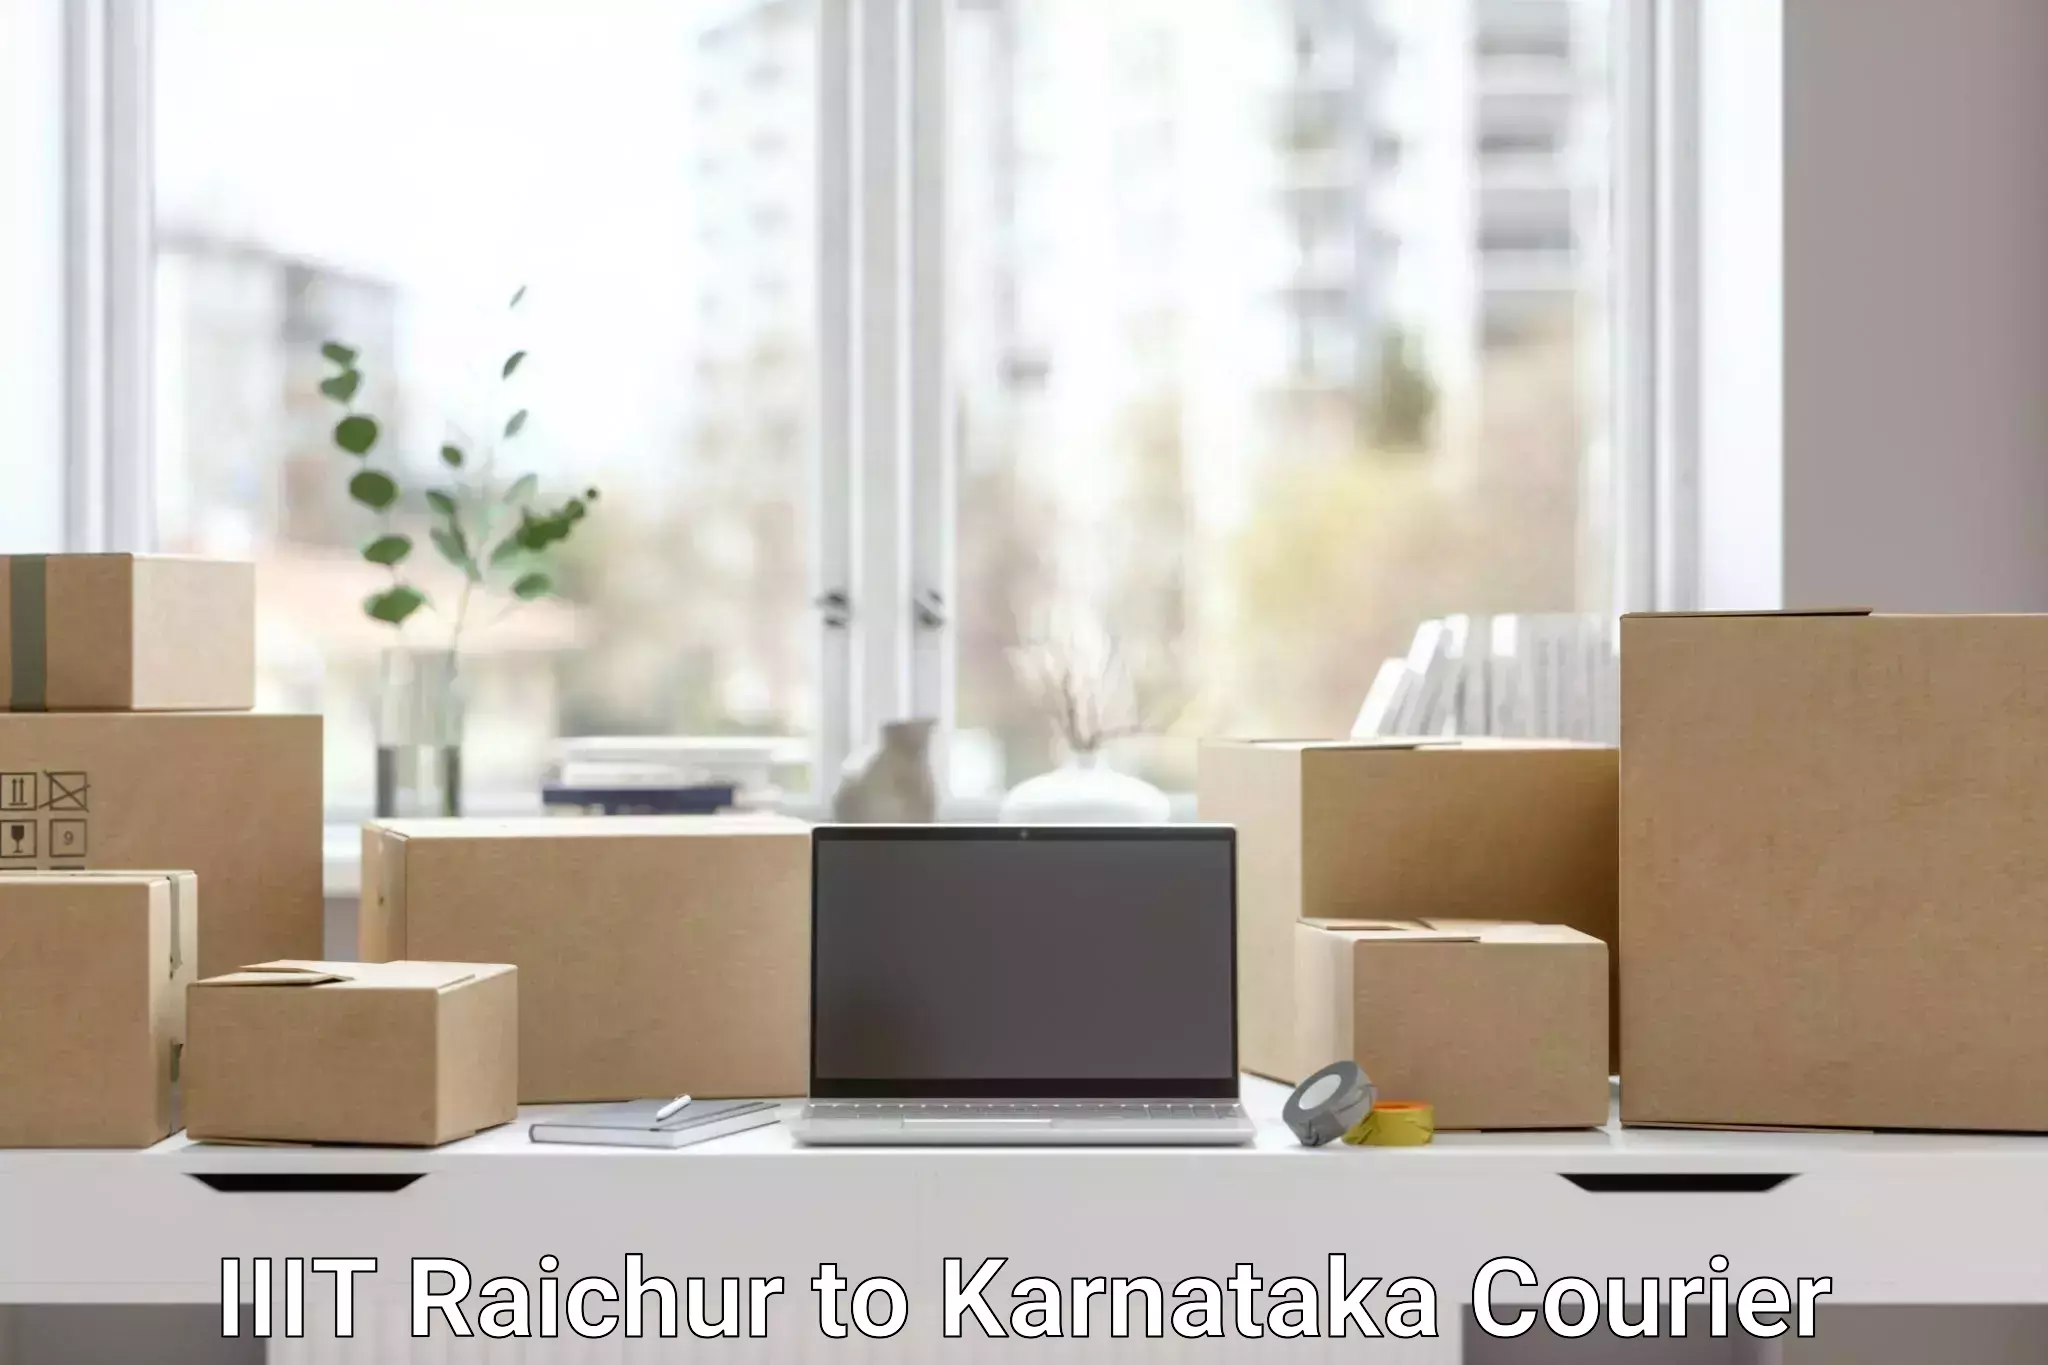 Express mail solutions IIIT Raichur to Shorapur